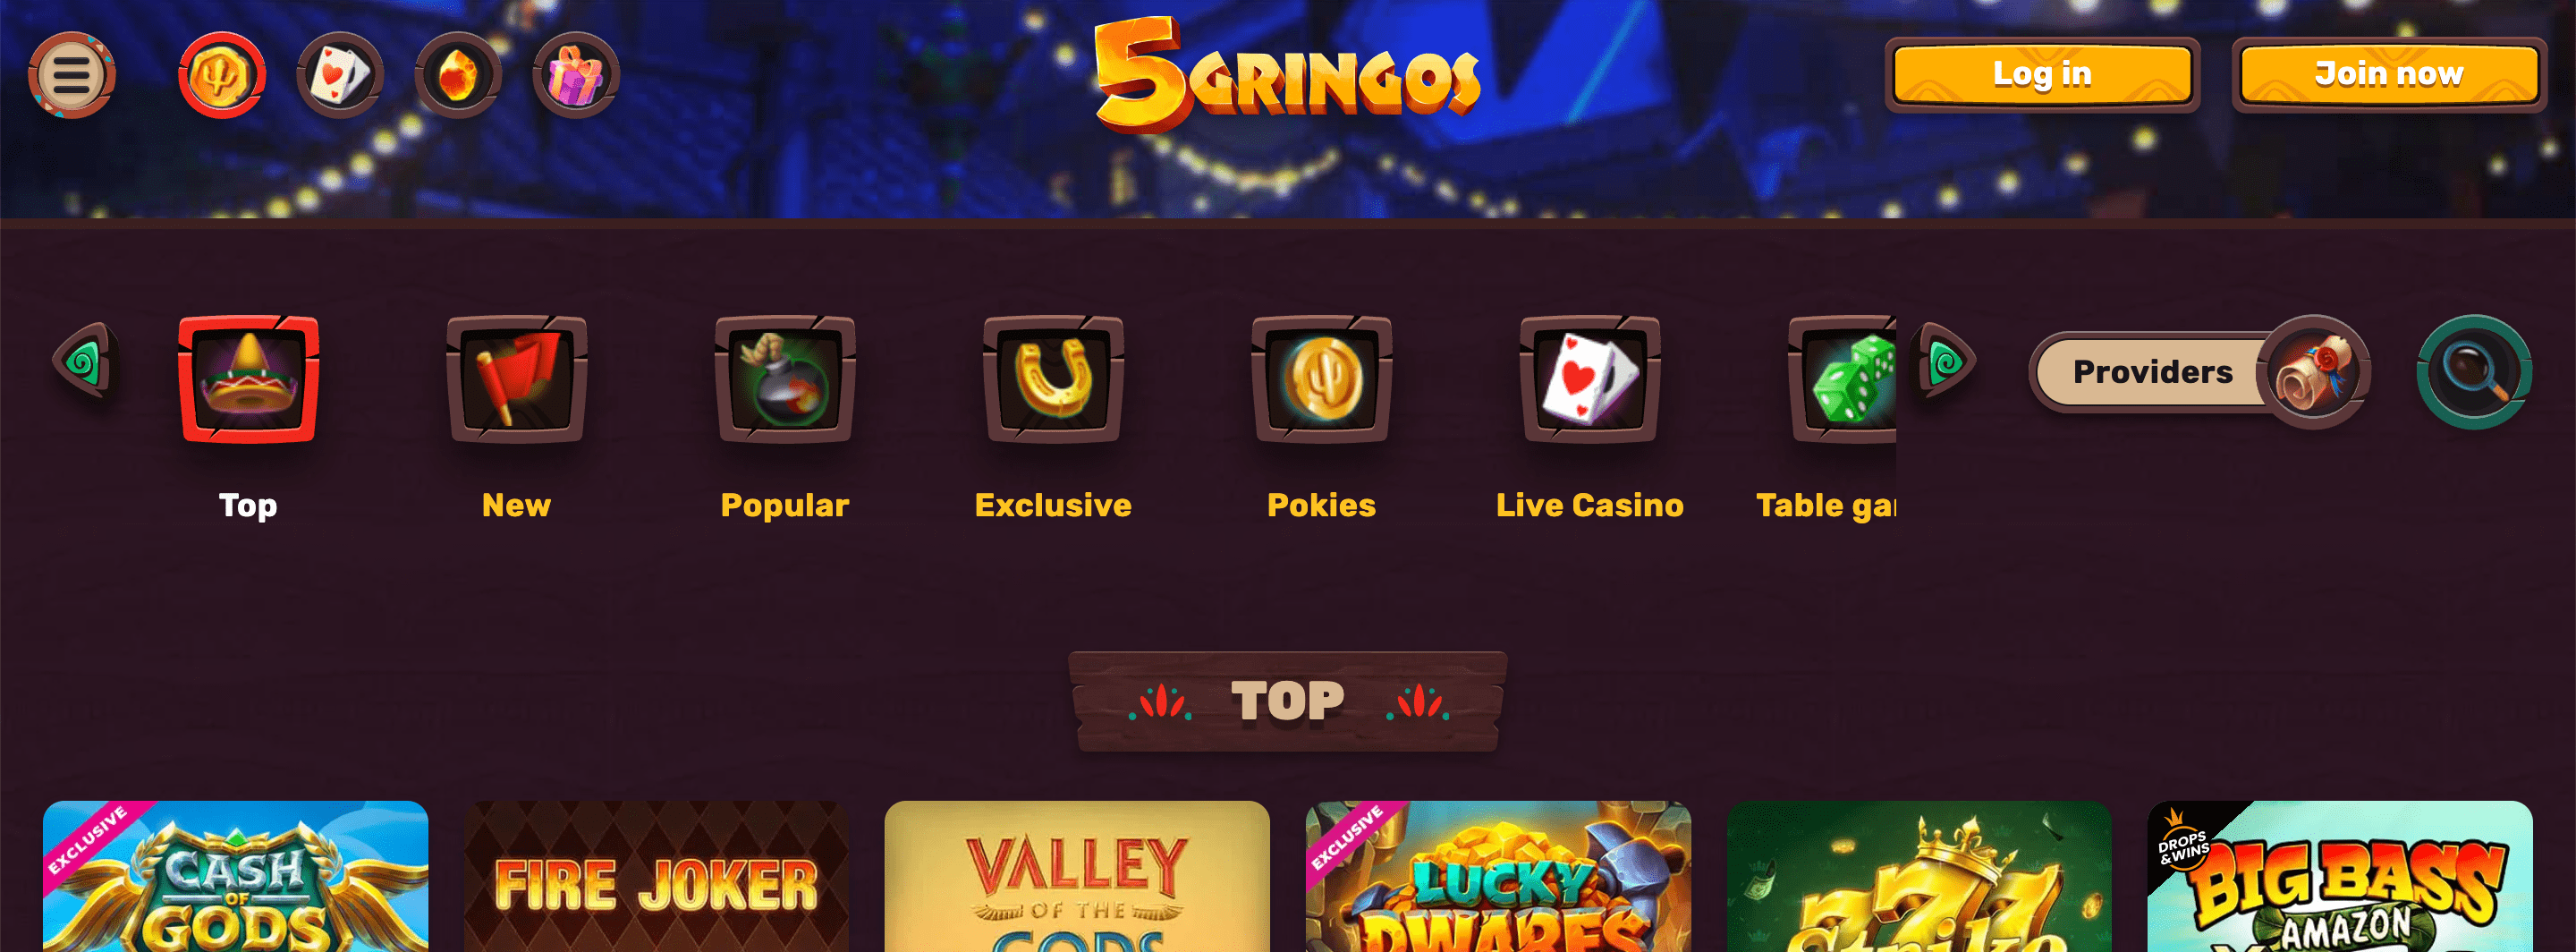 5Gringos Homepage